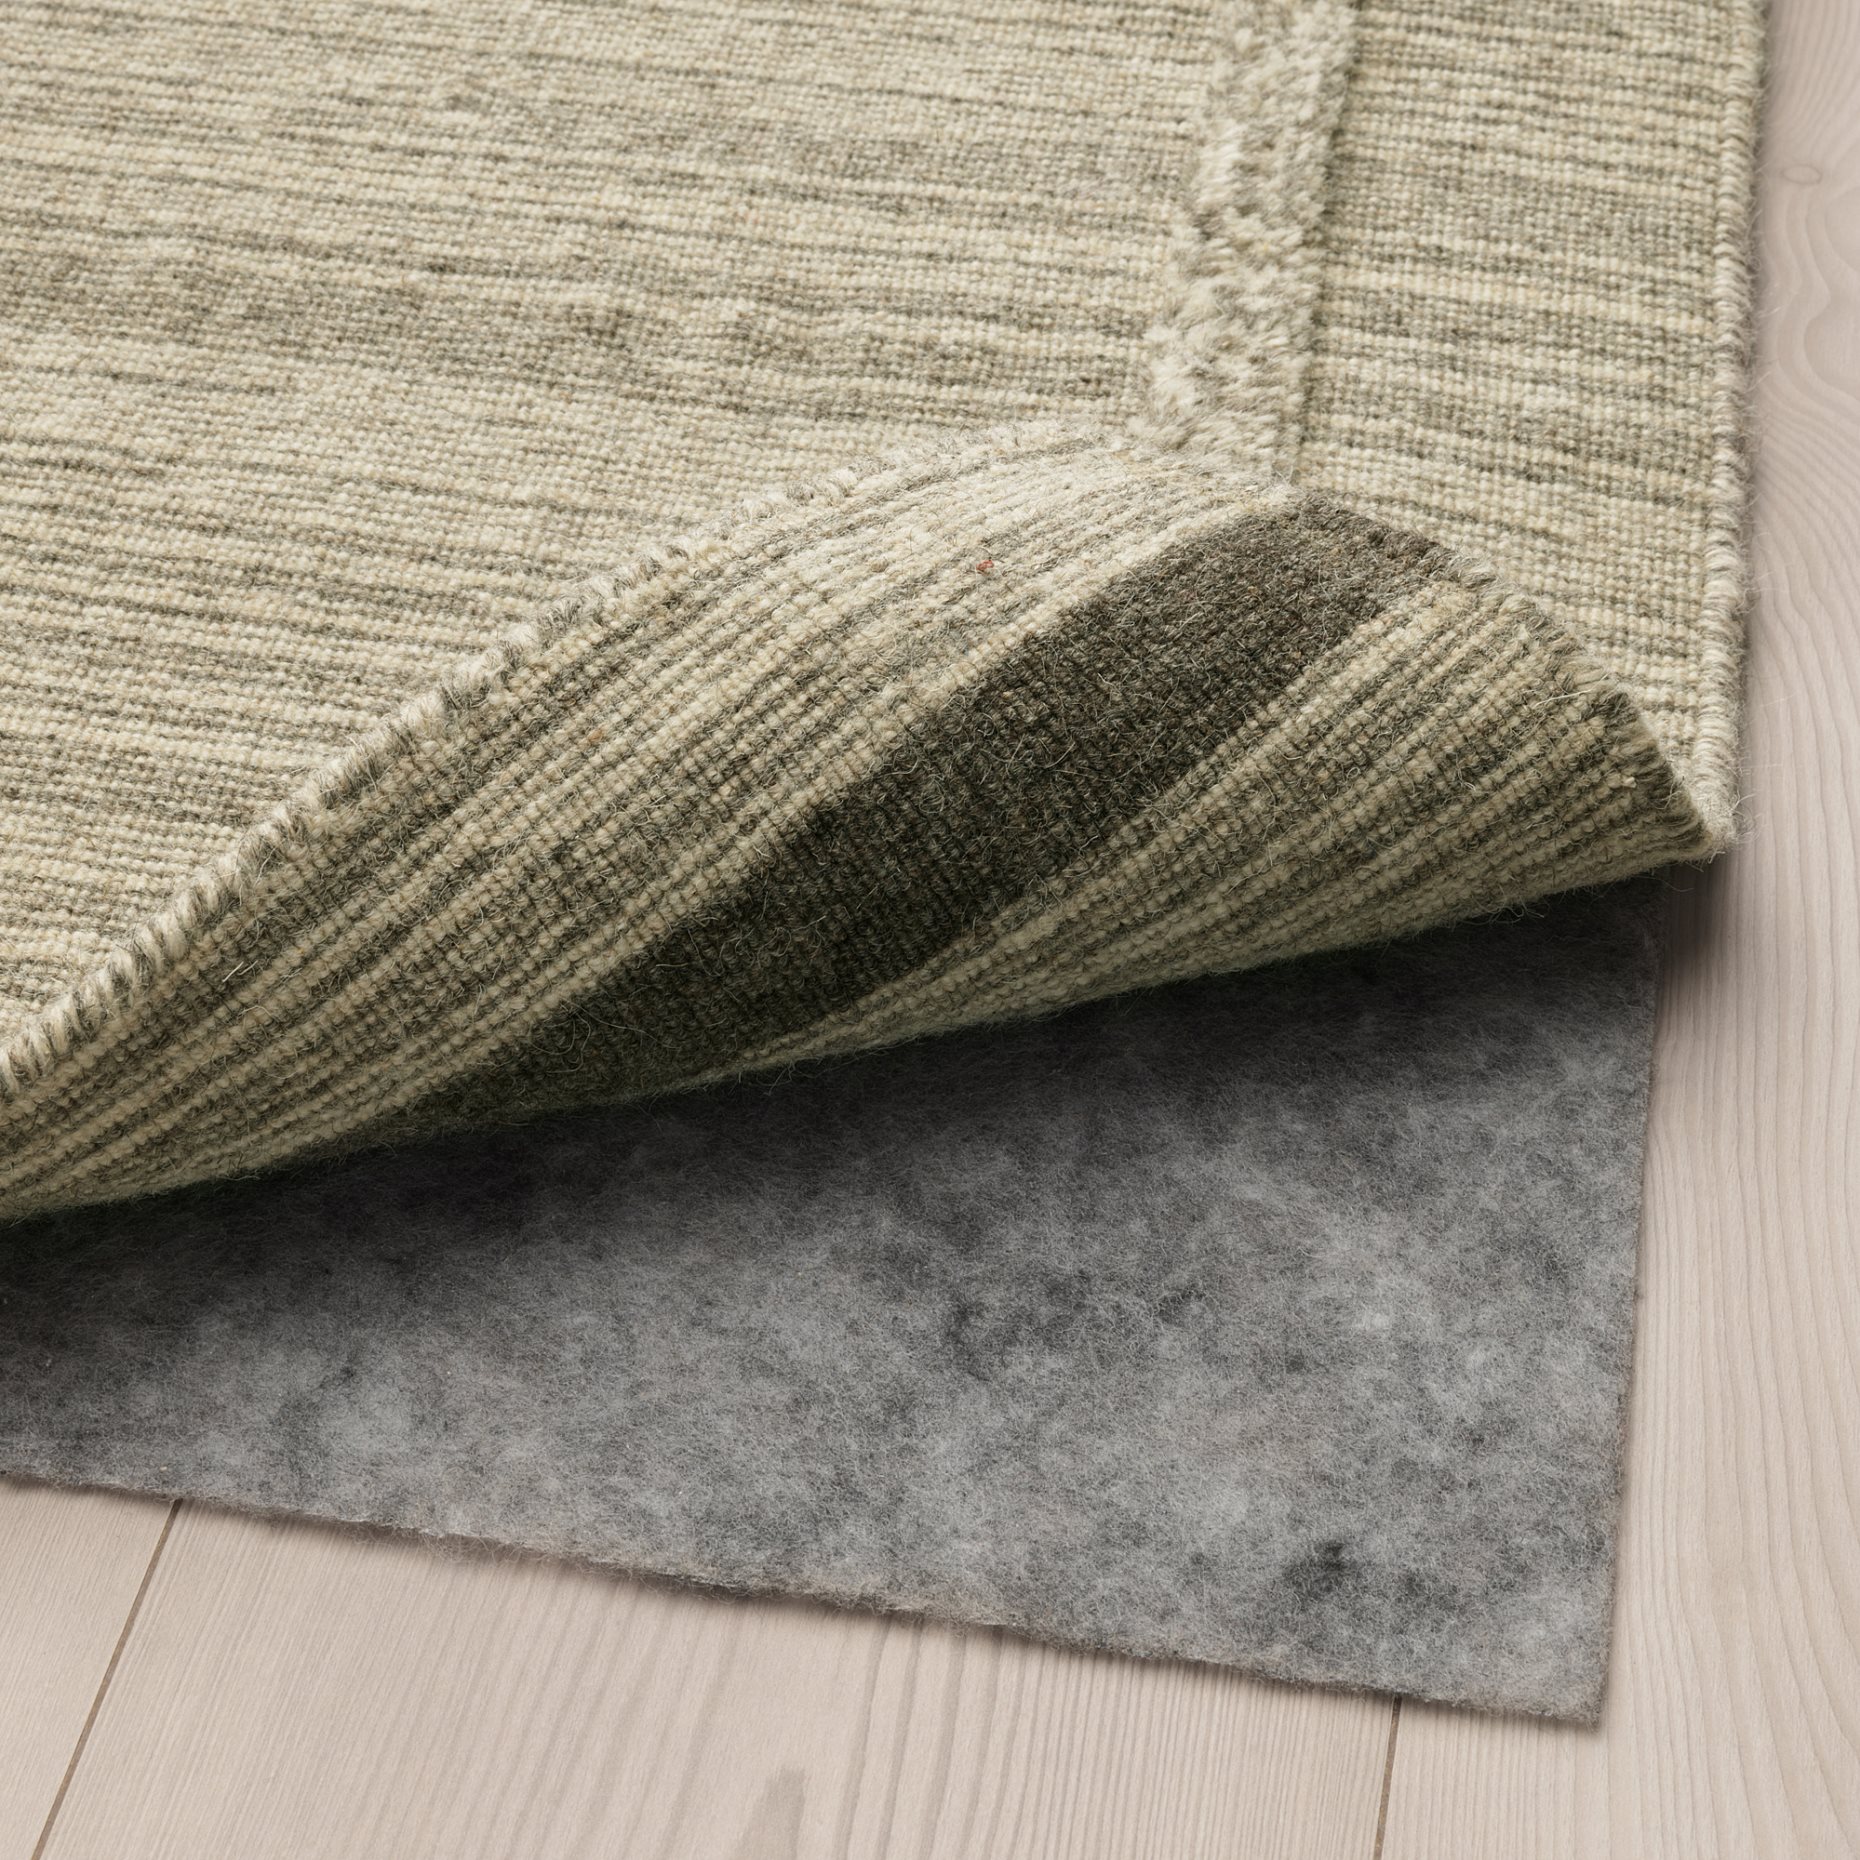 STOPP, rug underlay with anti-slip, 123x185 cm, 905.502.10